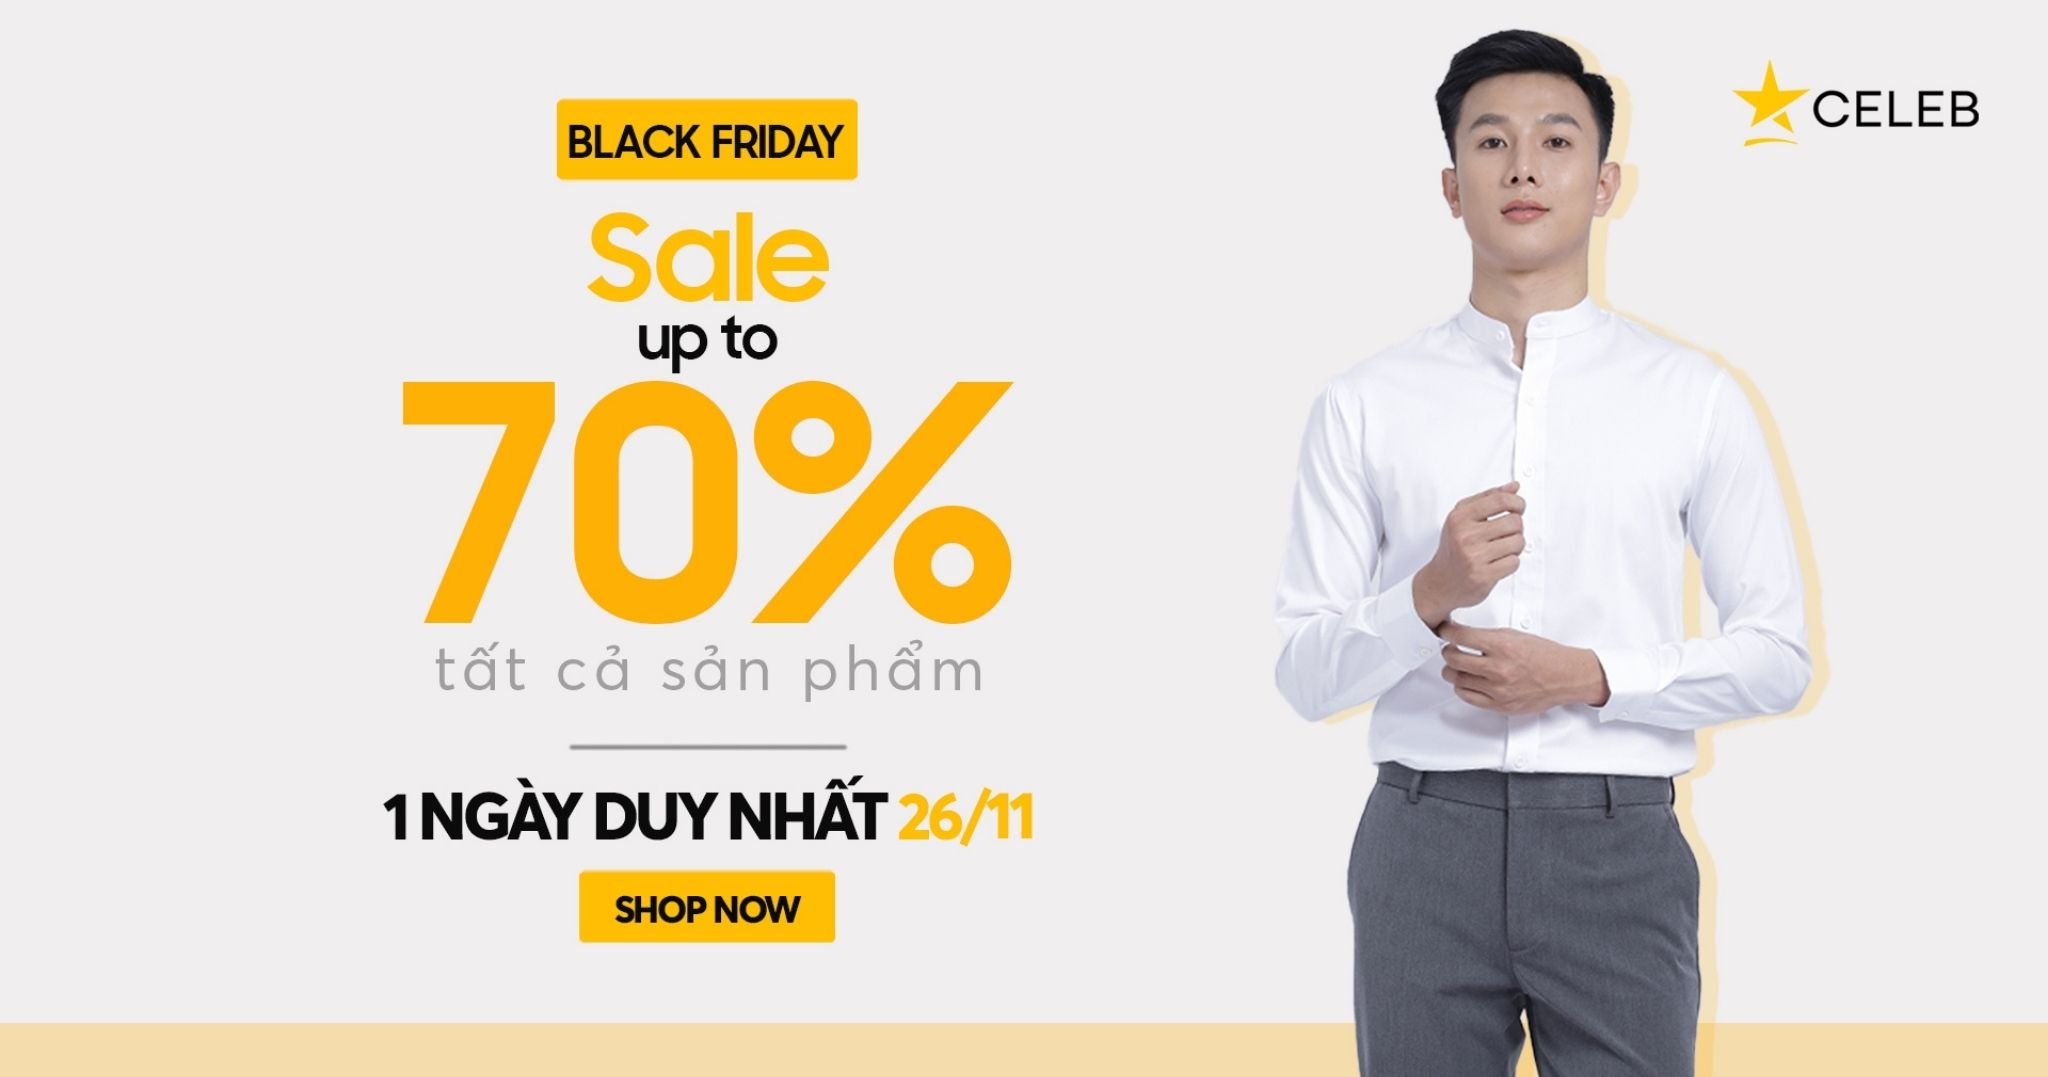 Black Friday - Siêu sale upto 70% tất cả các sản phẩm tại CELEB